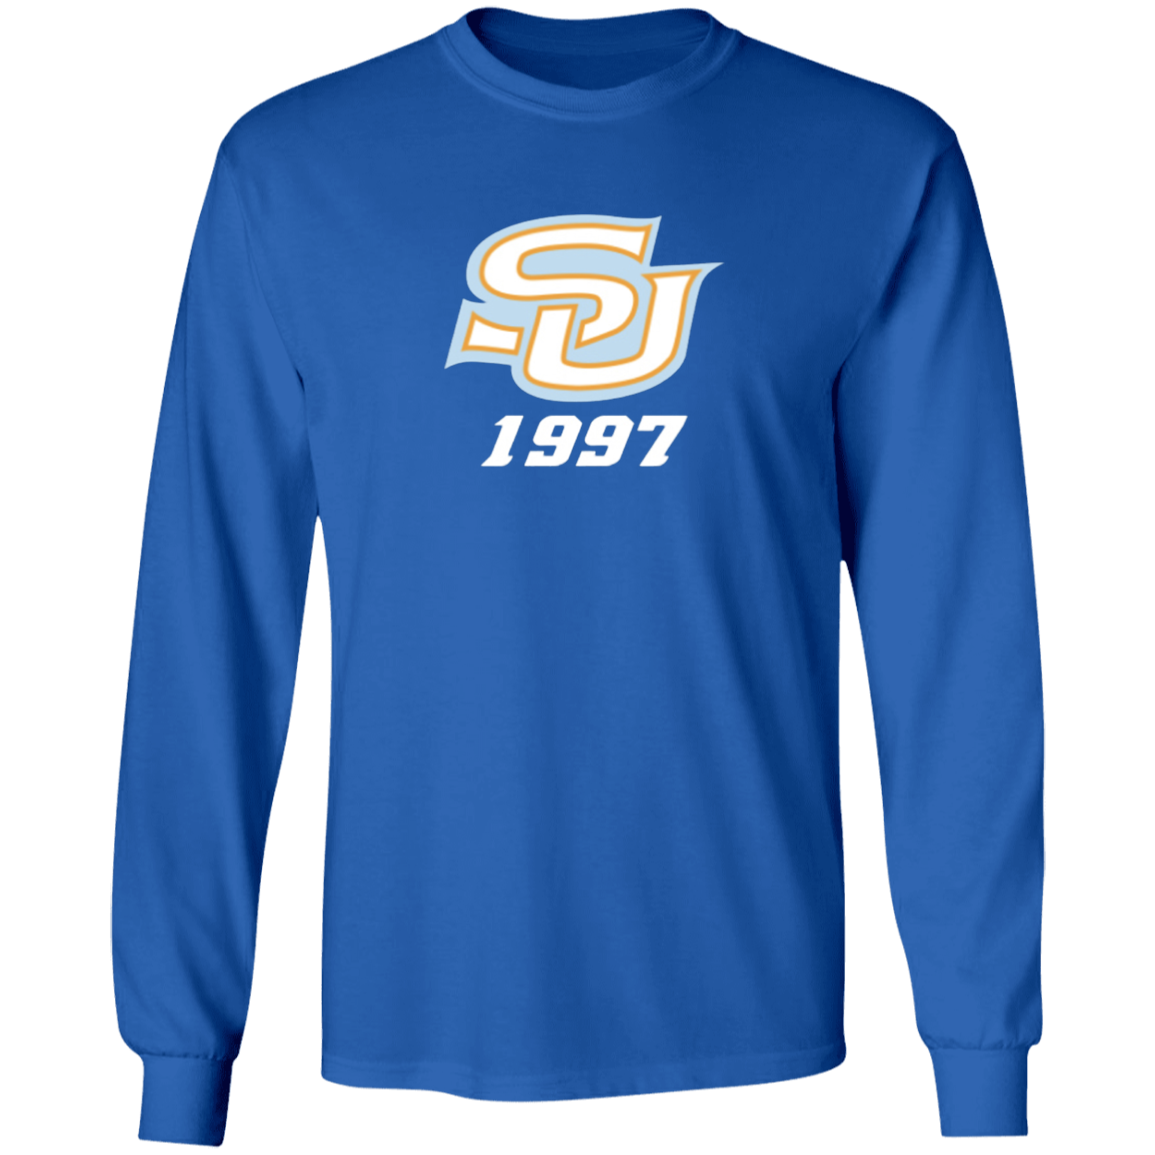 SU c/o 1997 G240 LS Ultra Cotton T-Shirt